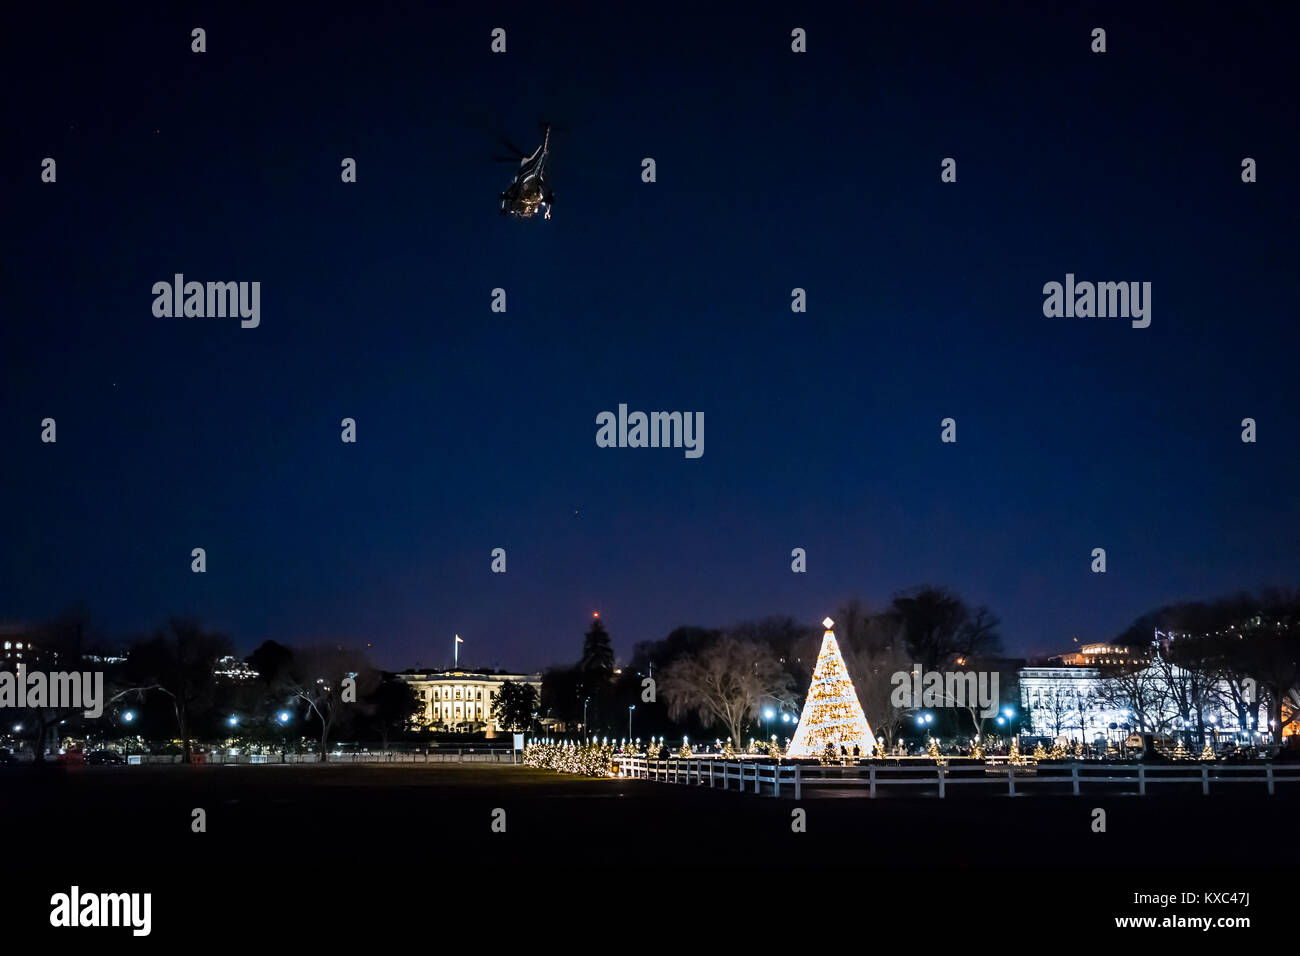 Washington DC, USA - December 28, 2017: President Donald J. Trump's Marine One helicopter flying landing at White House by National Christmas tree mem Stock Photo